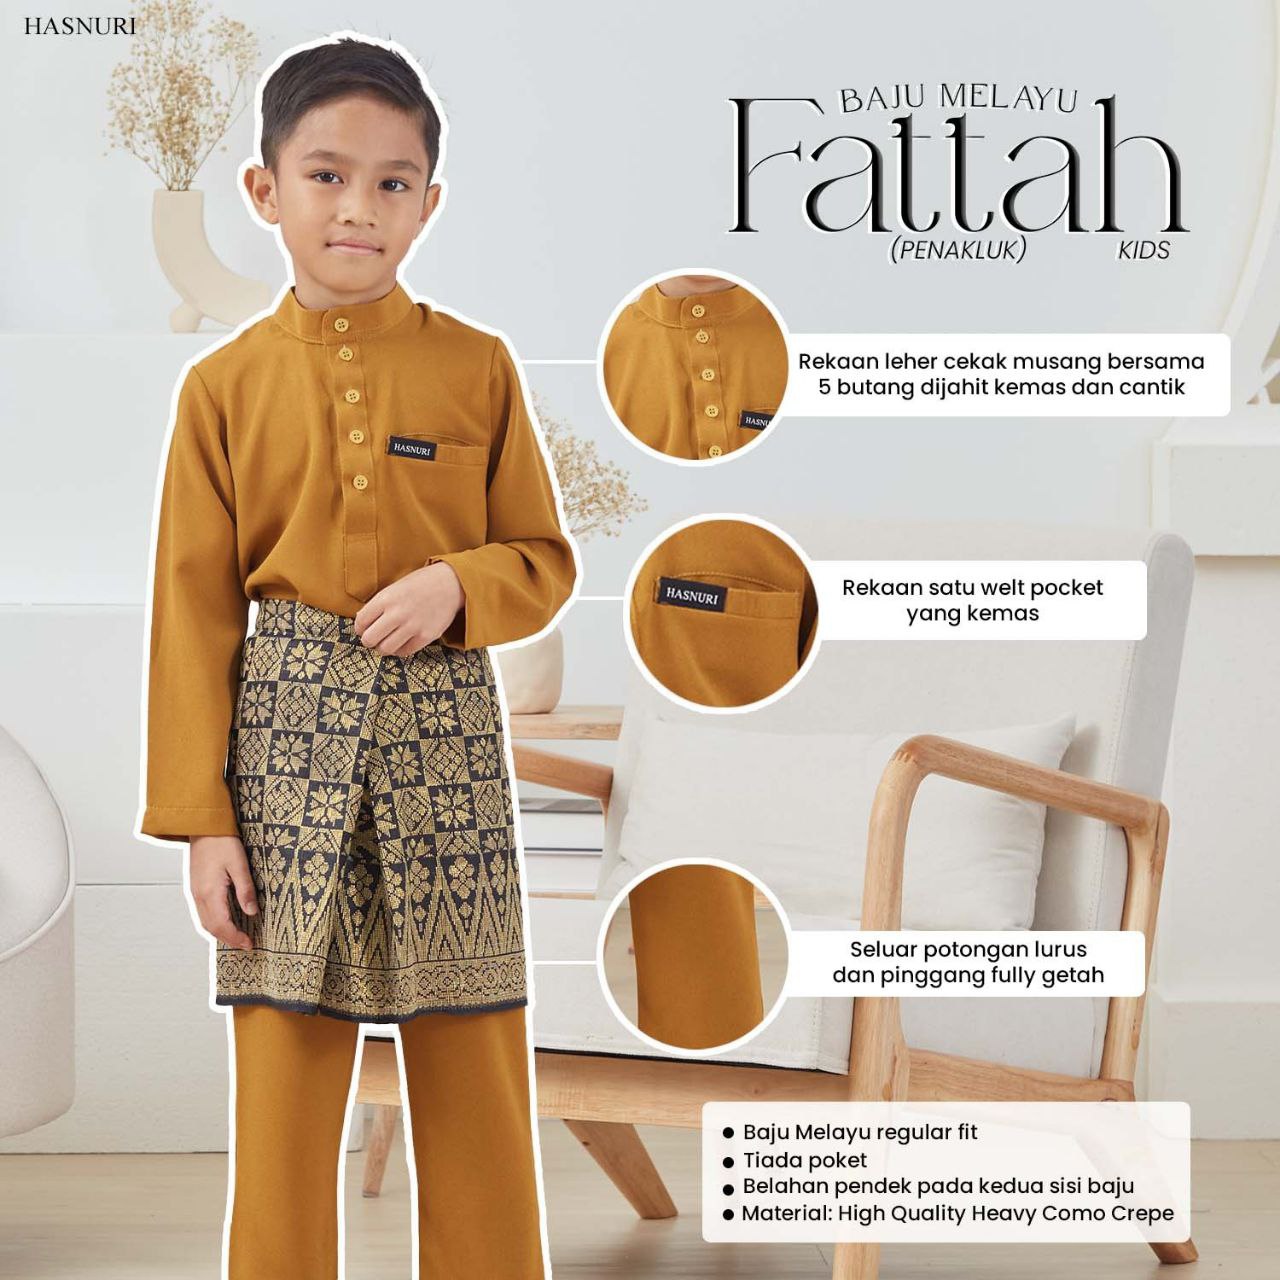 Baju Melayu Fattah Kids - Olive Green